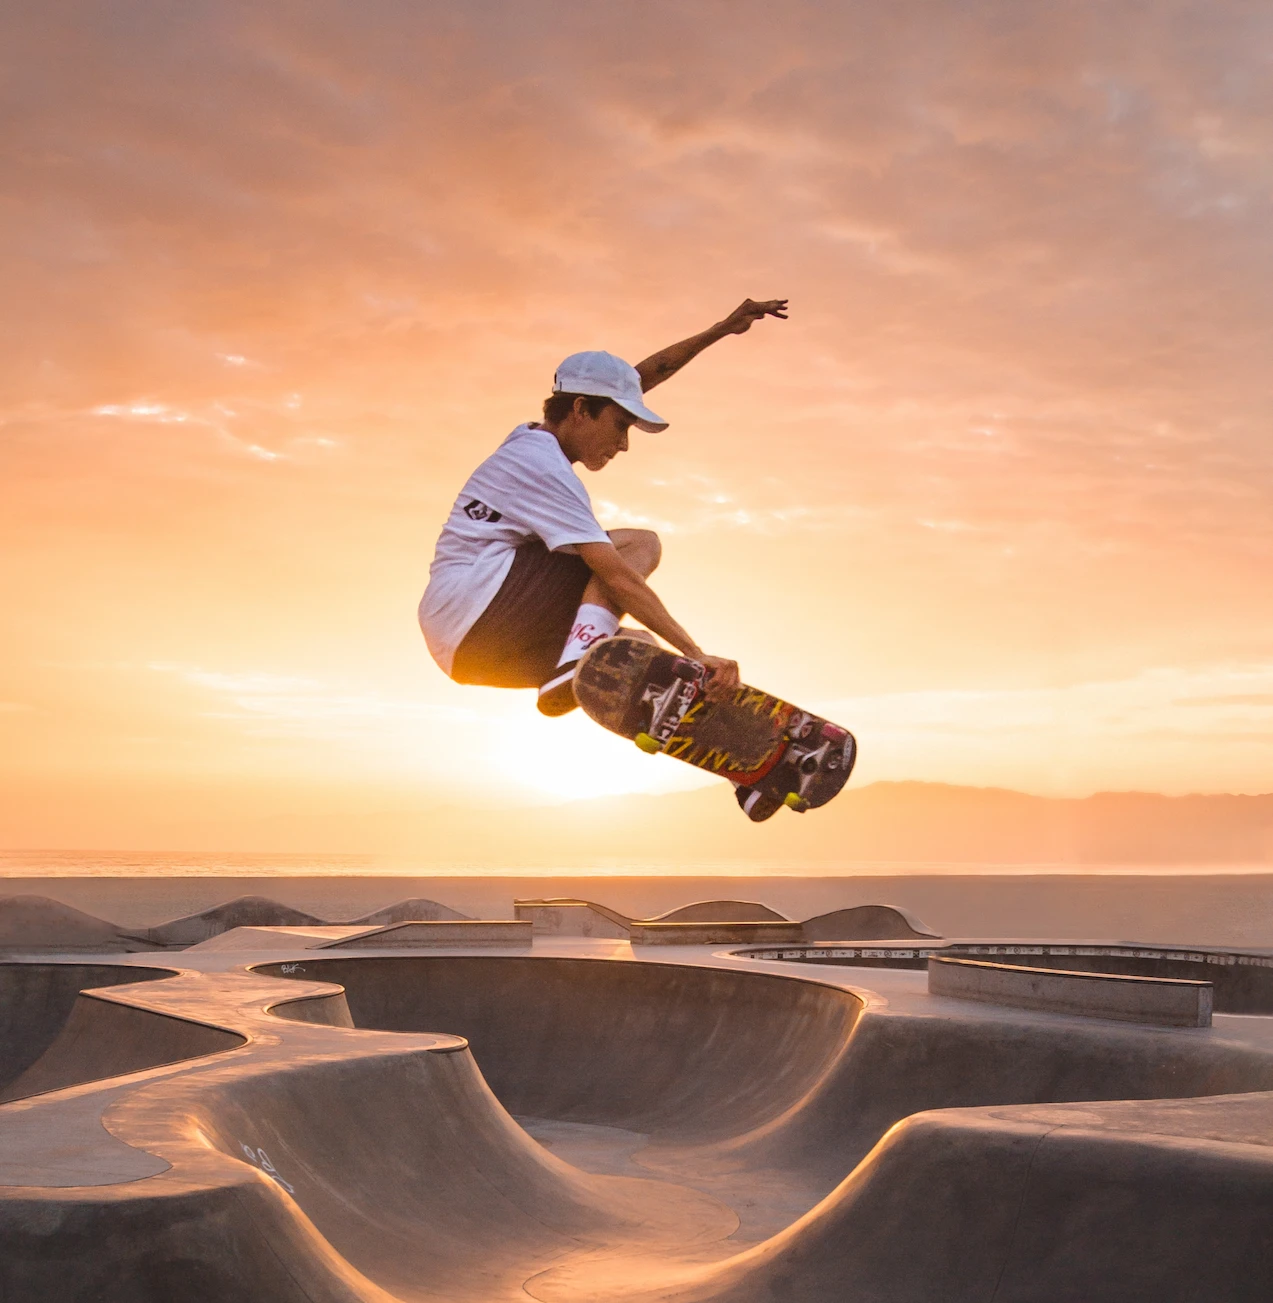 man on a skateboard skating above skatepark by the sunset